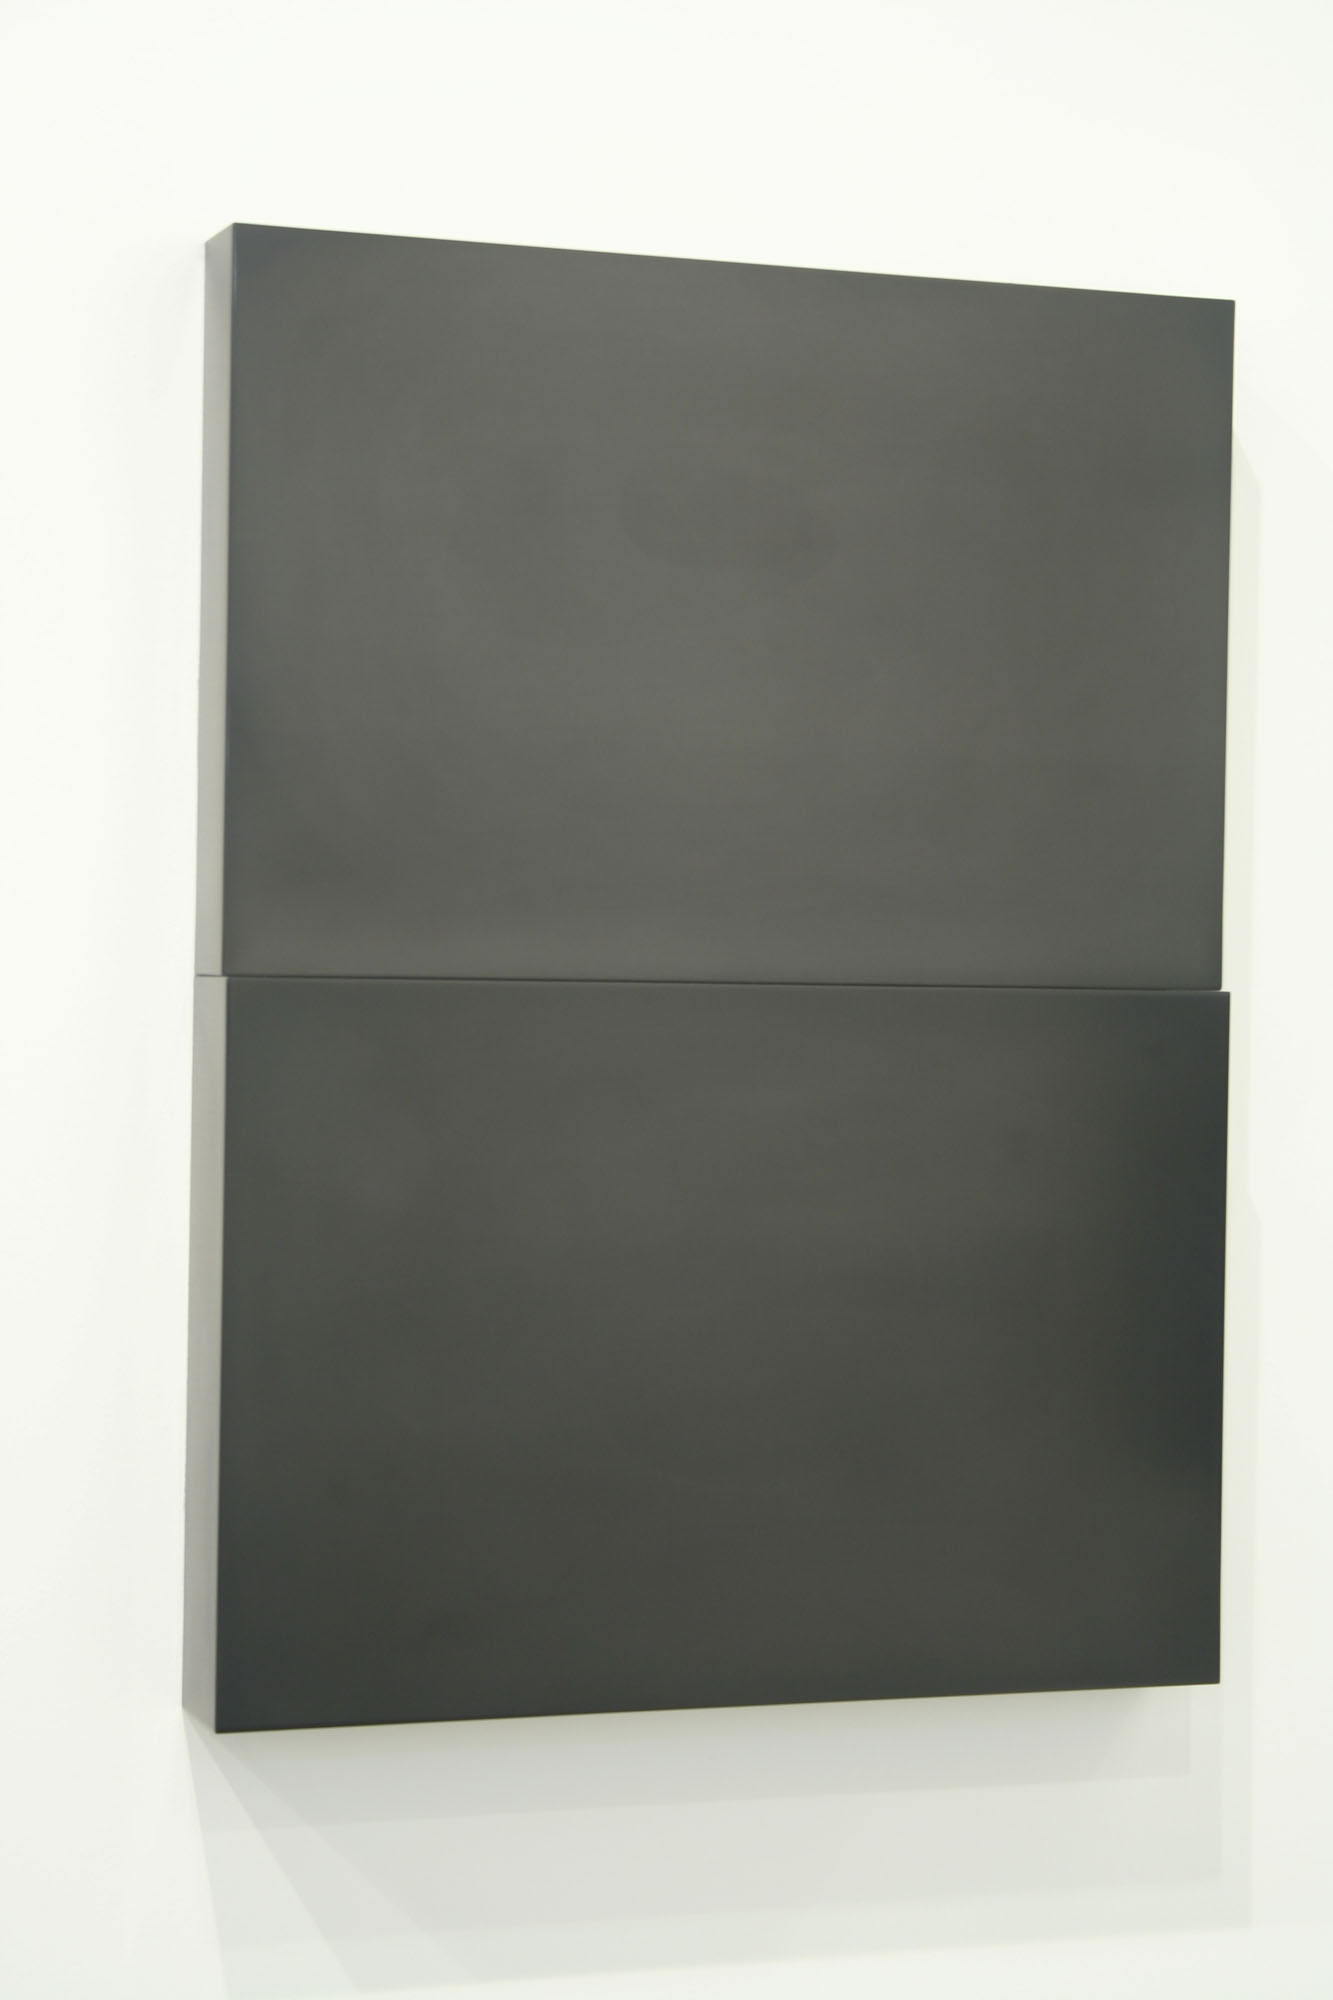   Diptych, no. 1, 2010 (detail view of sculpture)  Solid graphite,&nbsp;30” x 22” x 3” 